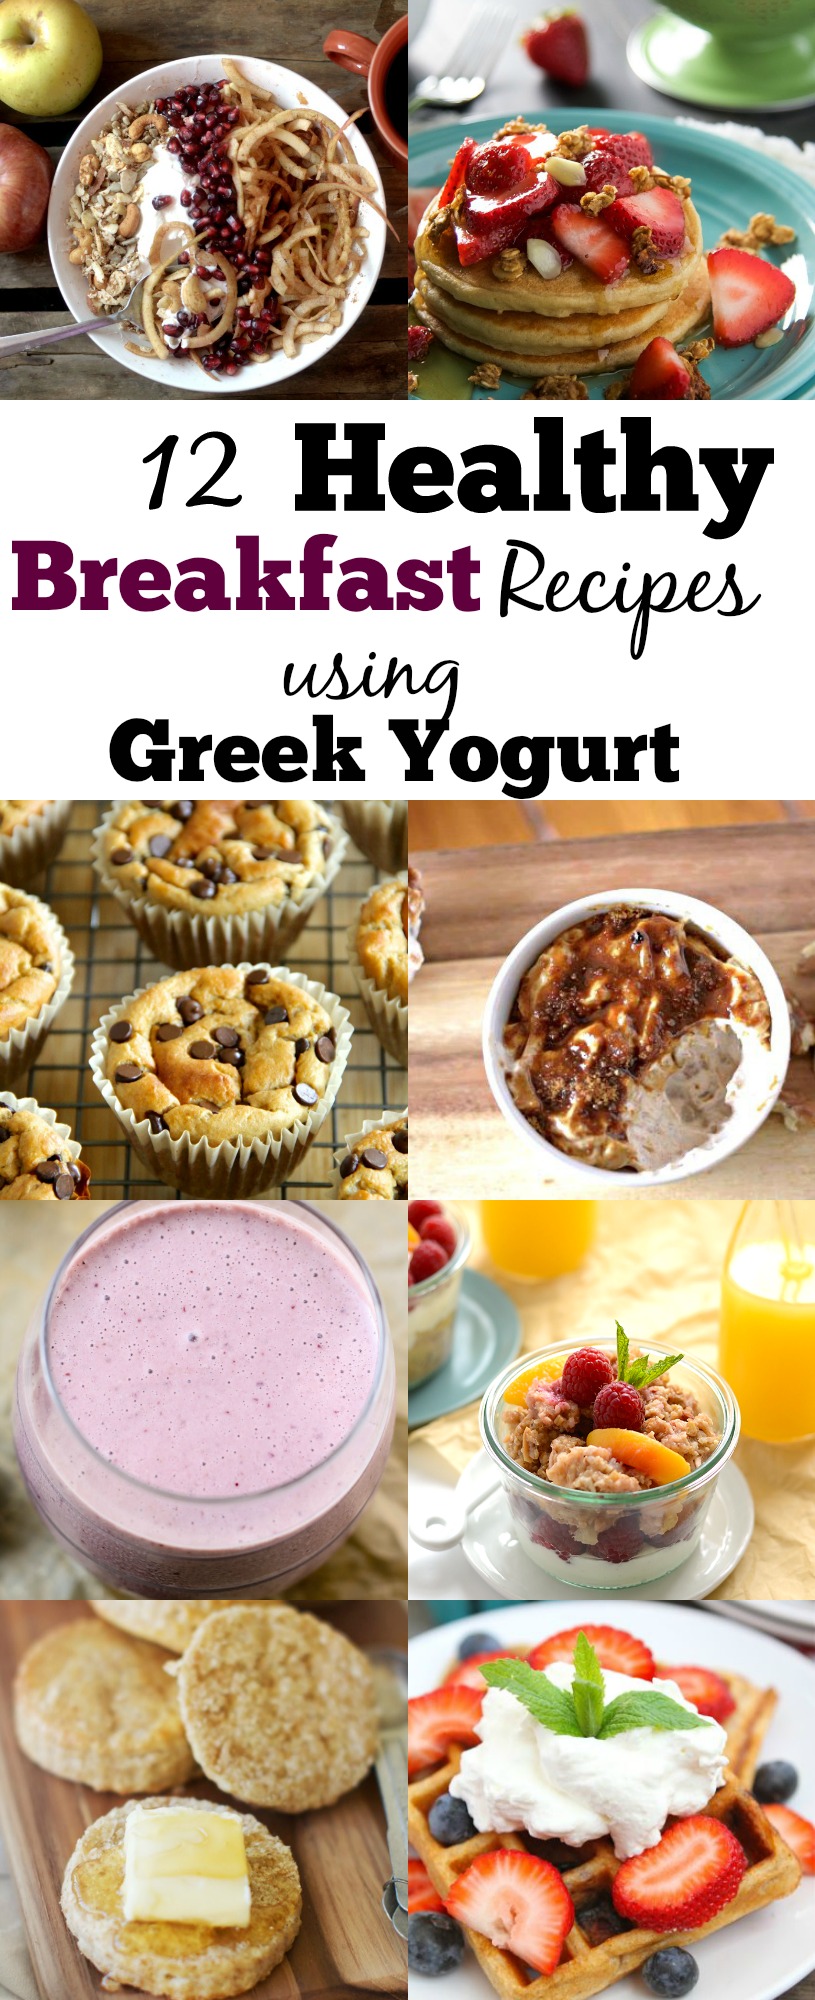 12 Healthy Greek Yogurt Breakfast Recipes